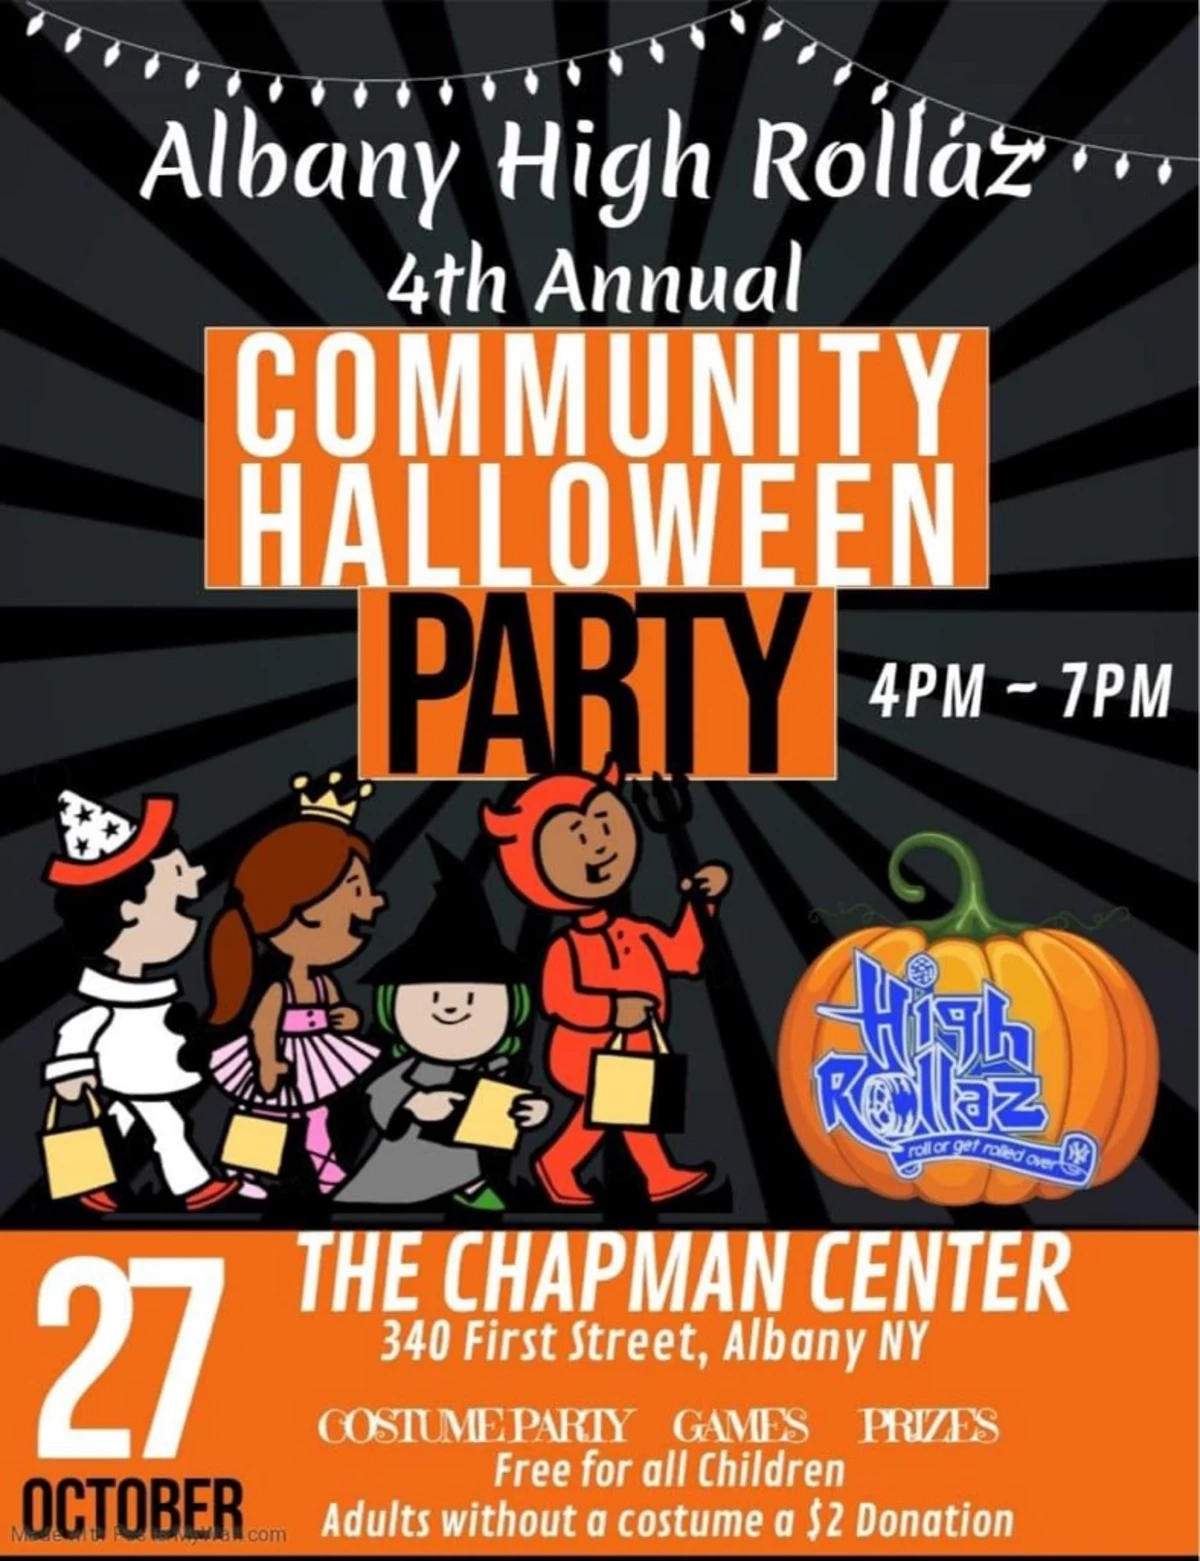 Albany HighRollaz 4th Annual Community Halloween Party